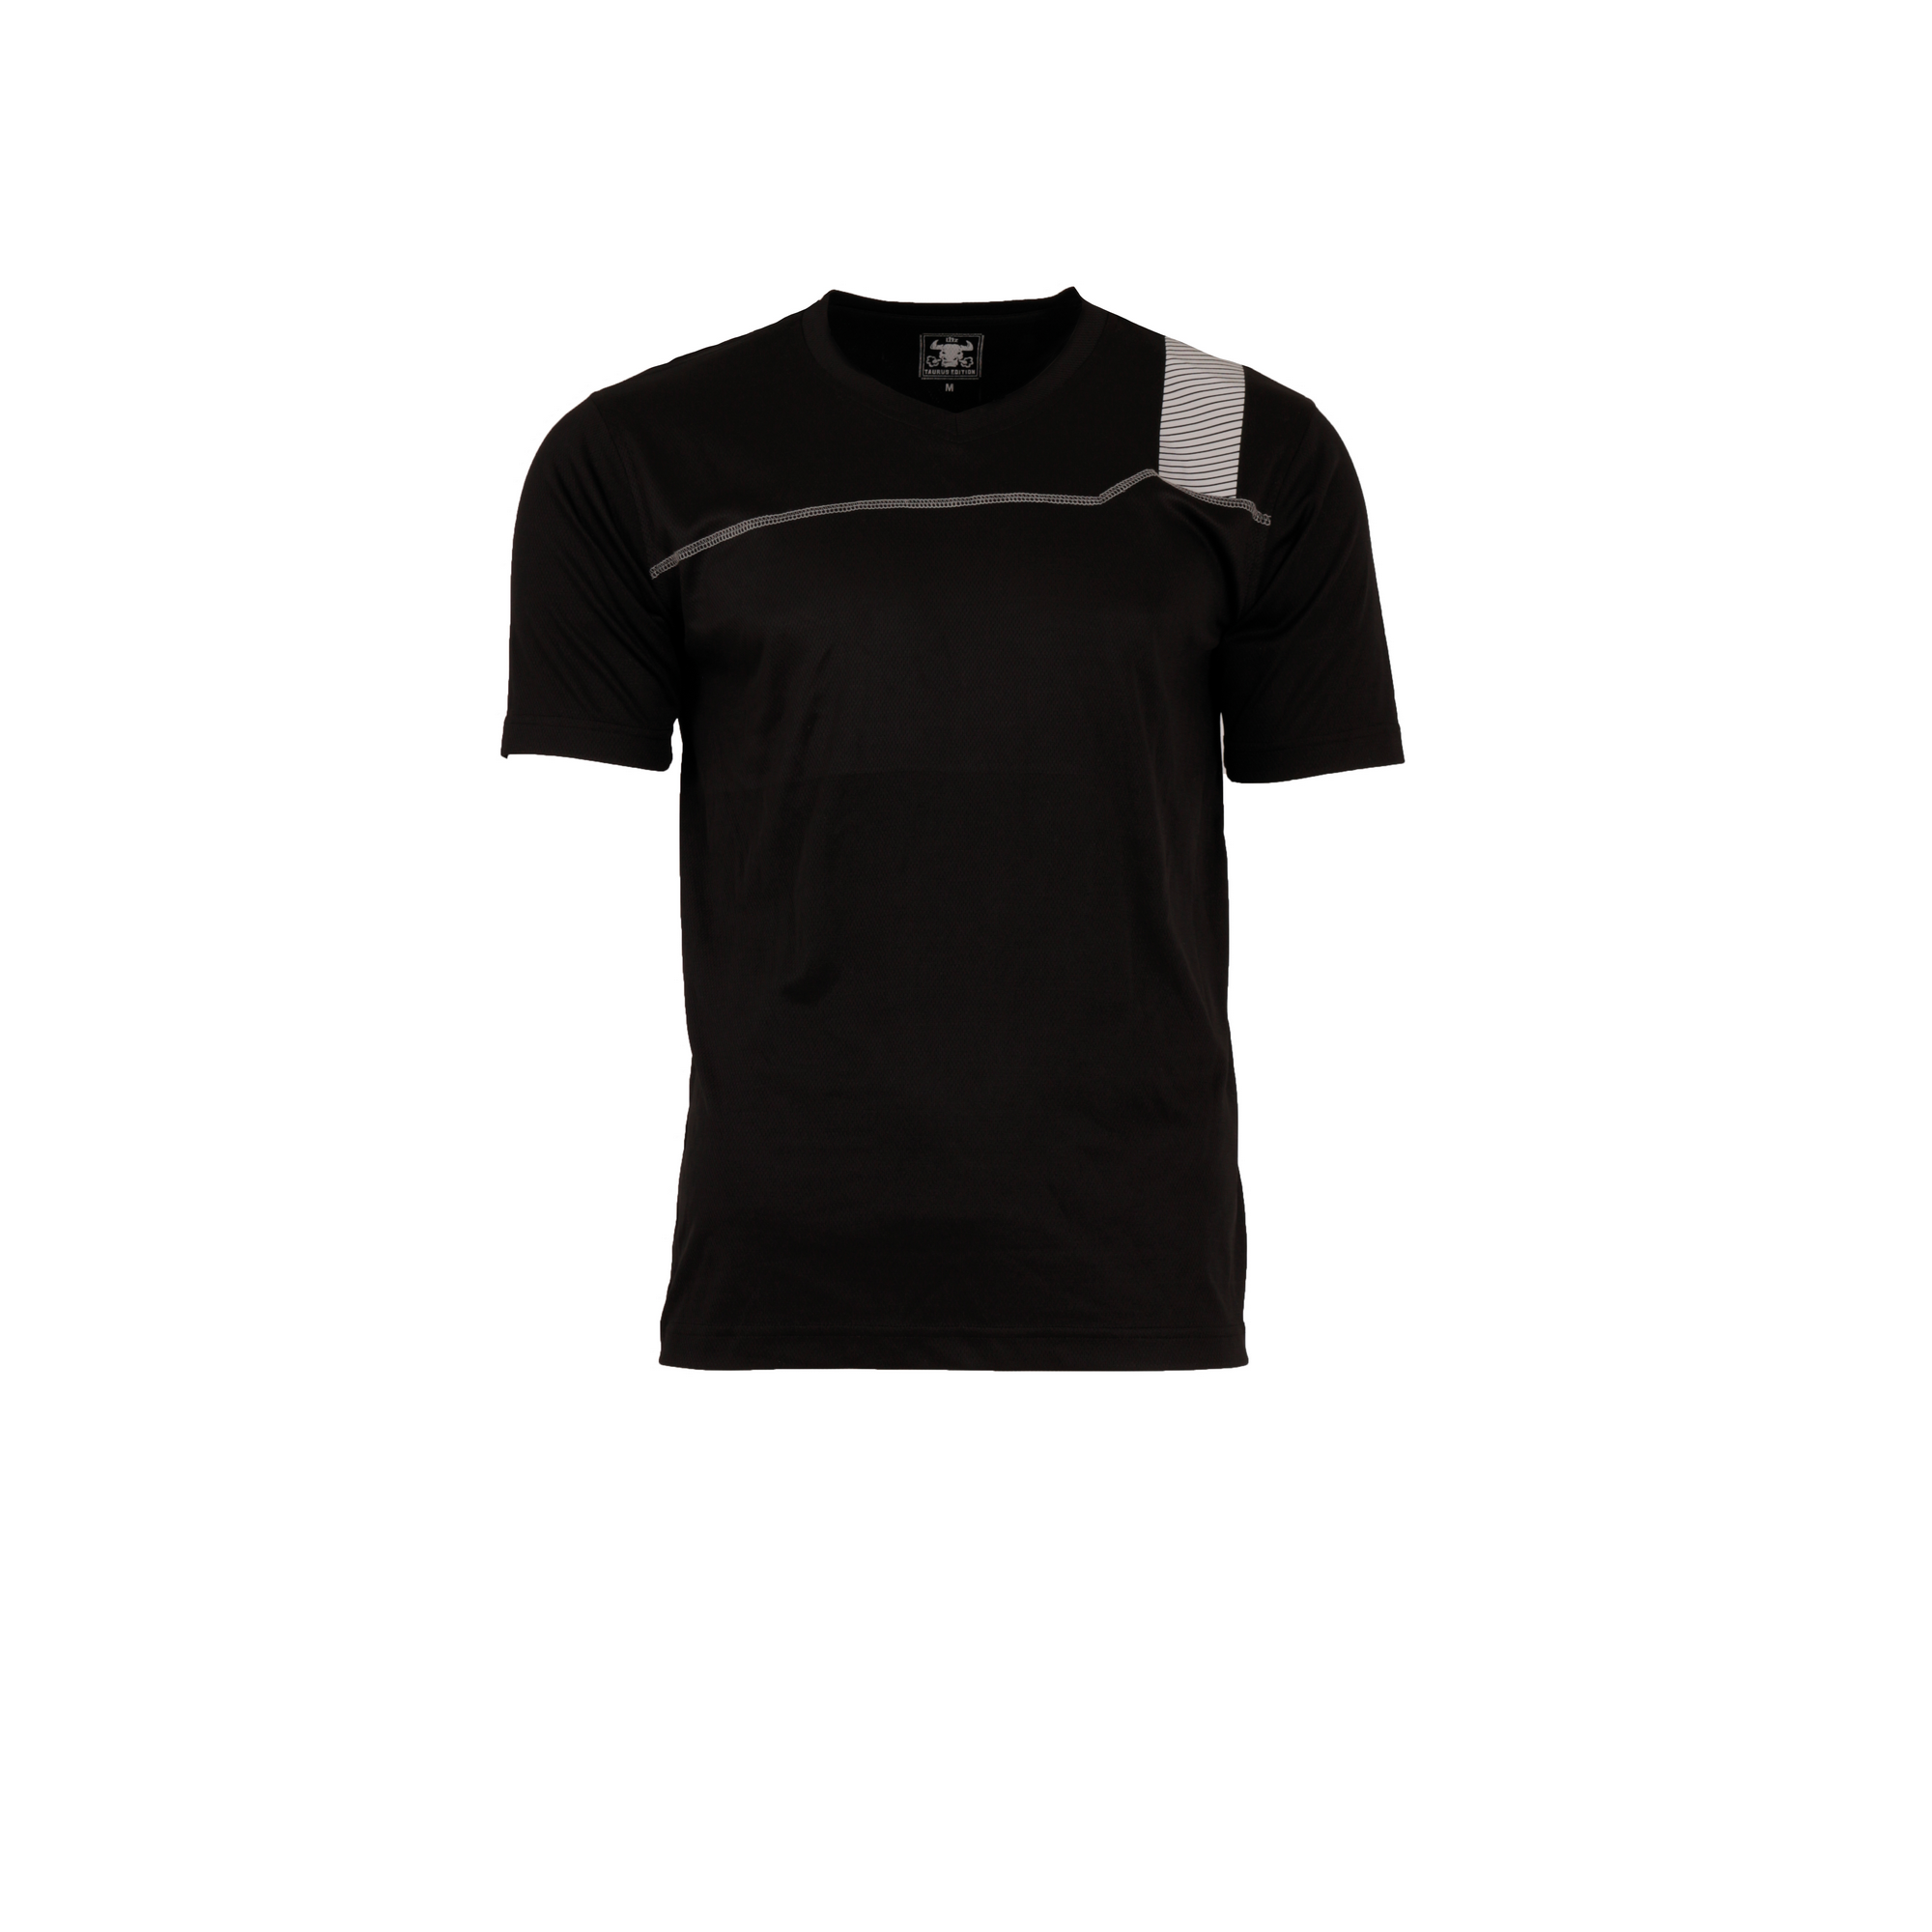 T-Shirt 'Taurus' schwarz XL + product picture